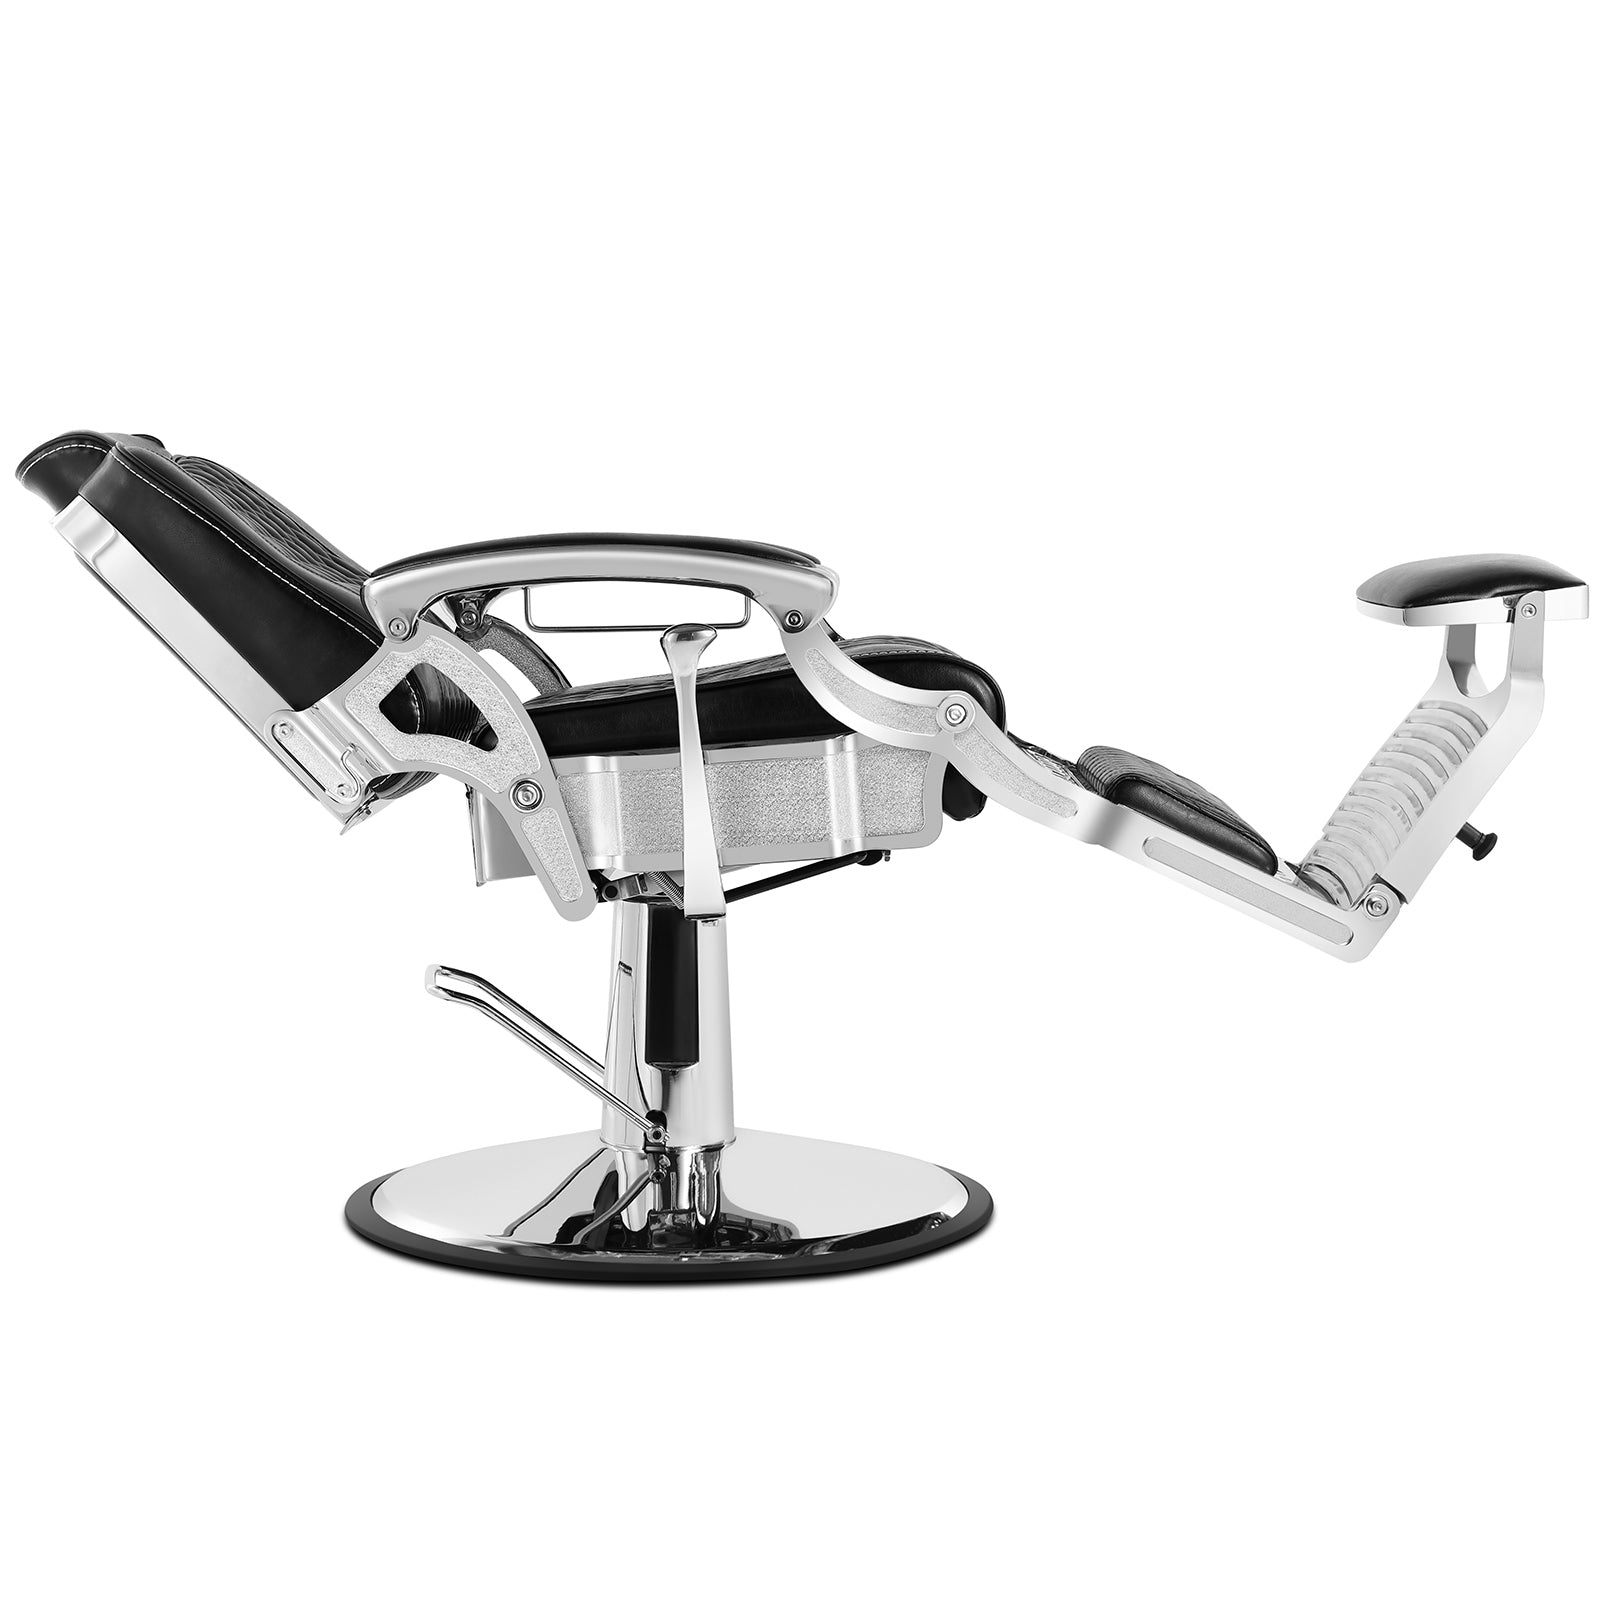 #5044 Retro Barber Chair Classic Heavy Duty Barber Chair